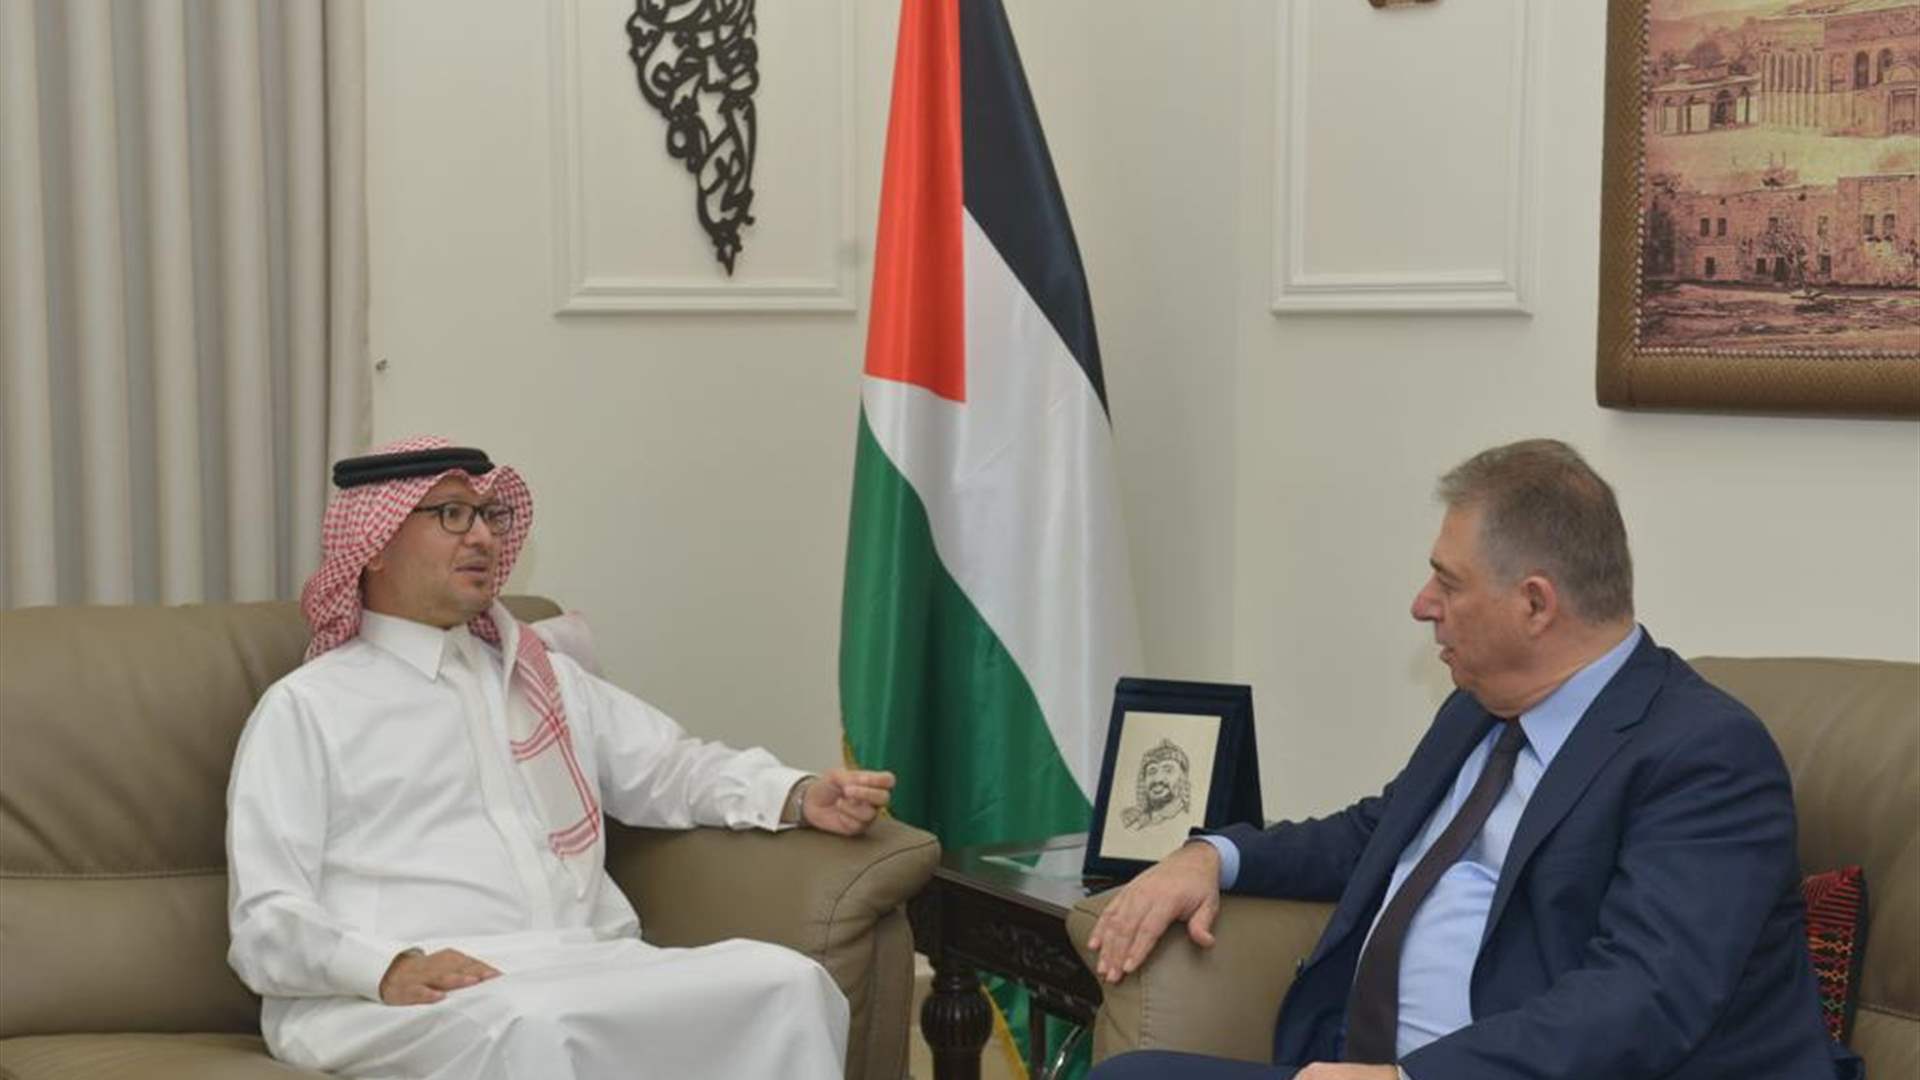 Saudi Ambassador to Lebanon: The Kingdom will continue close coordination to end the crisis in Gaza